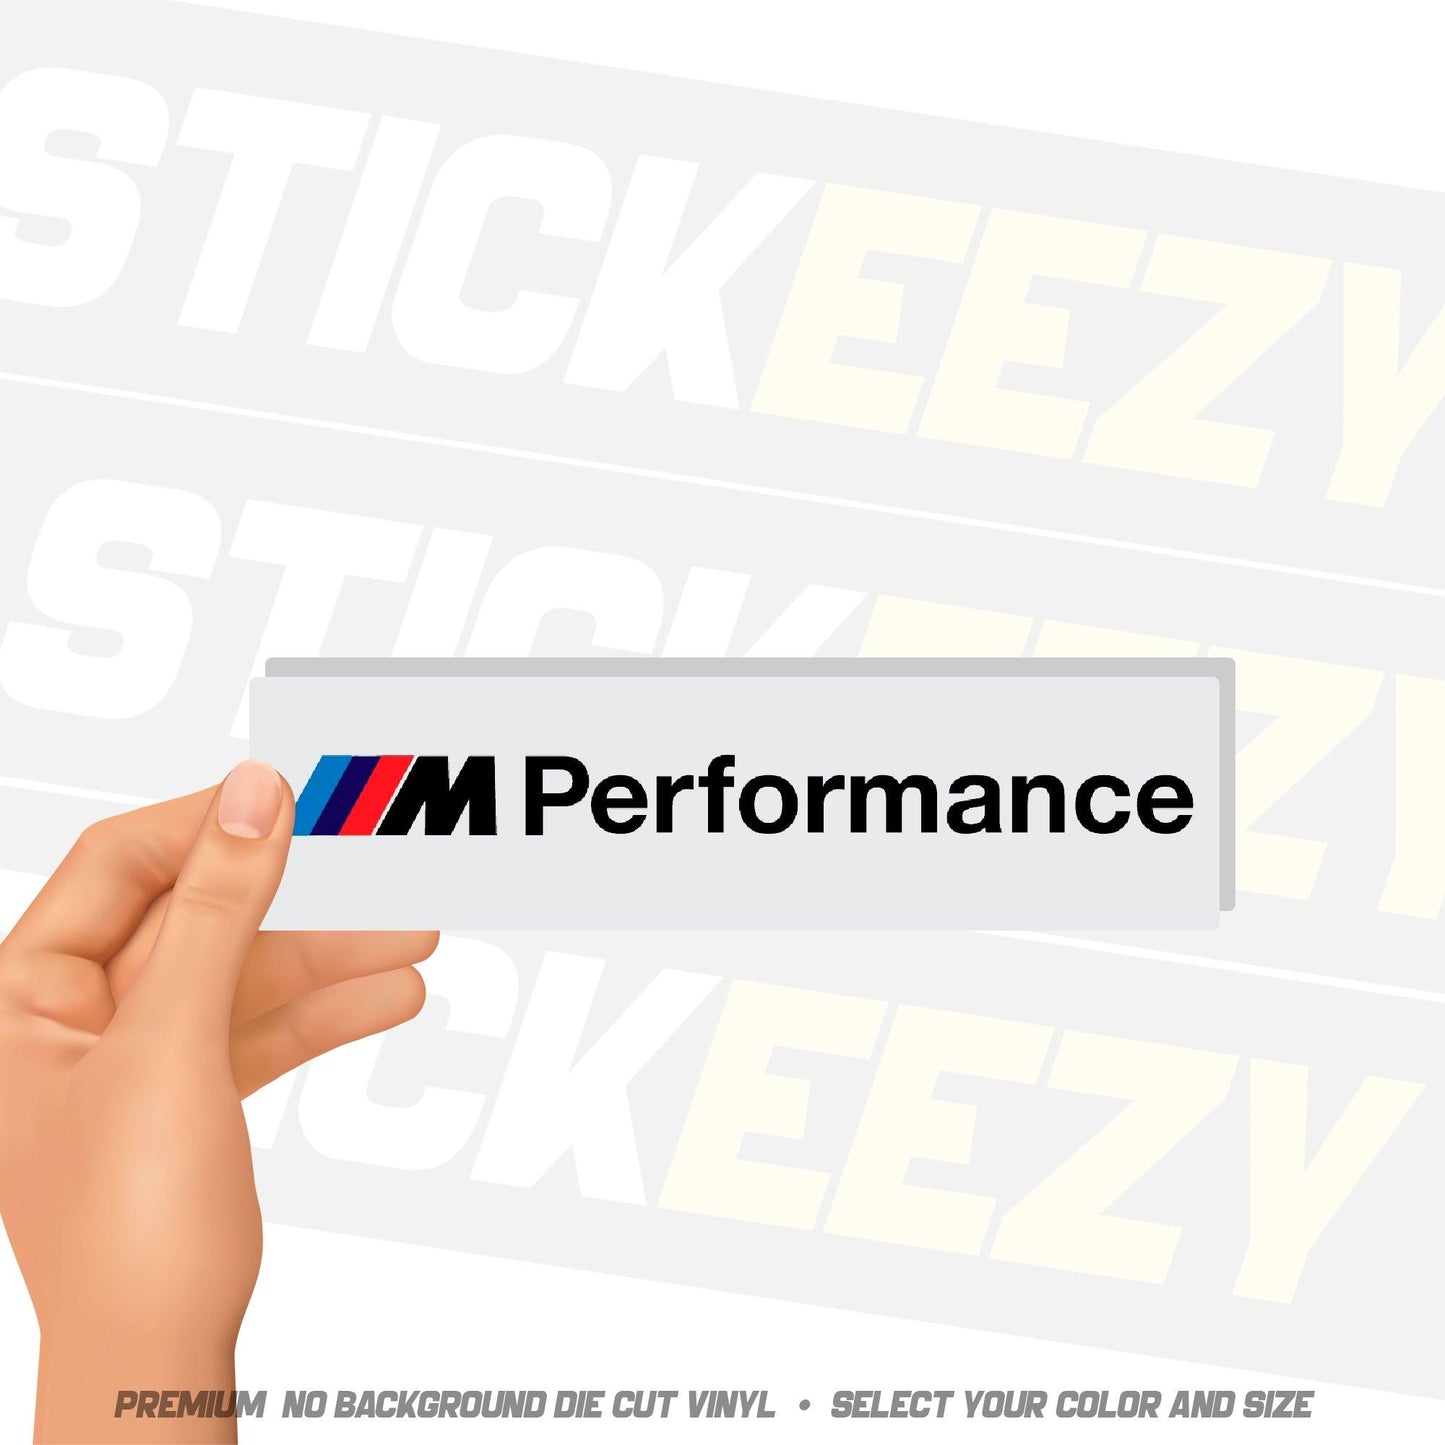 BMW M Performance Brake Caliper Decal 2 pcs - stickeezy